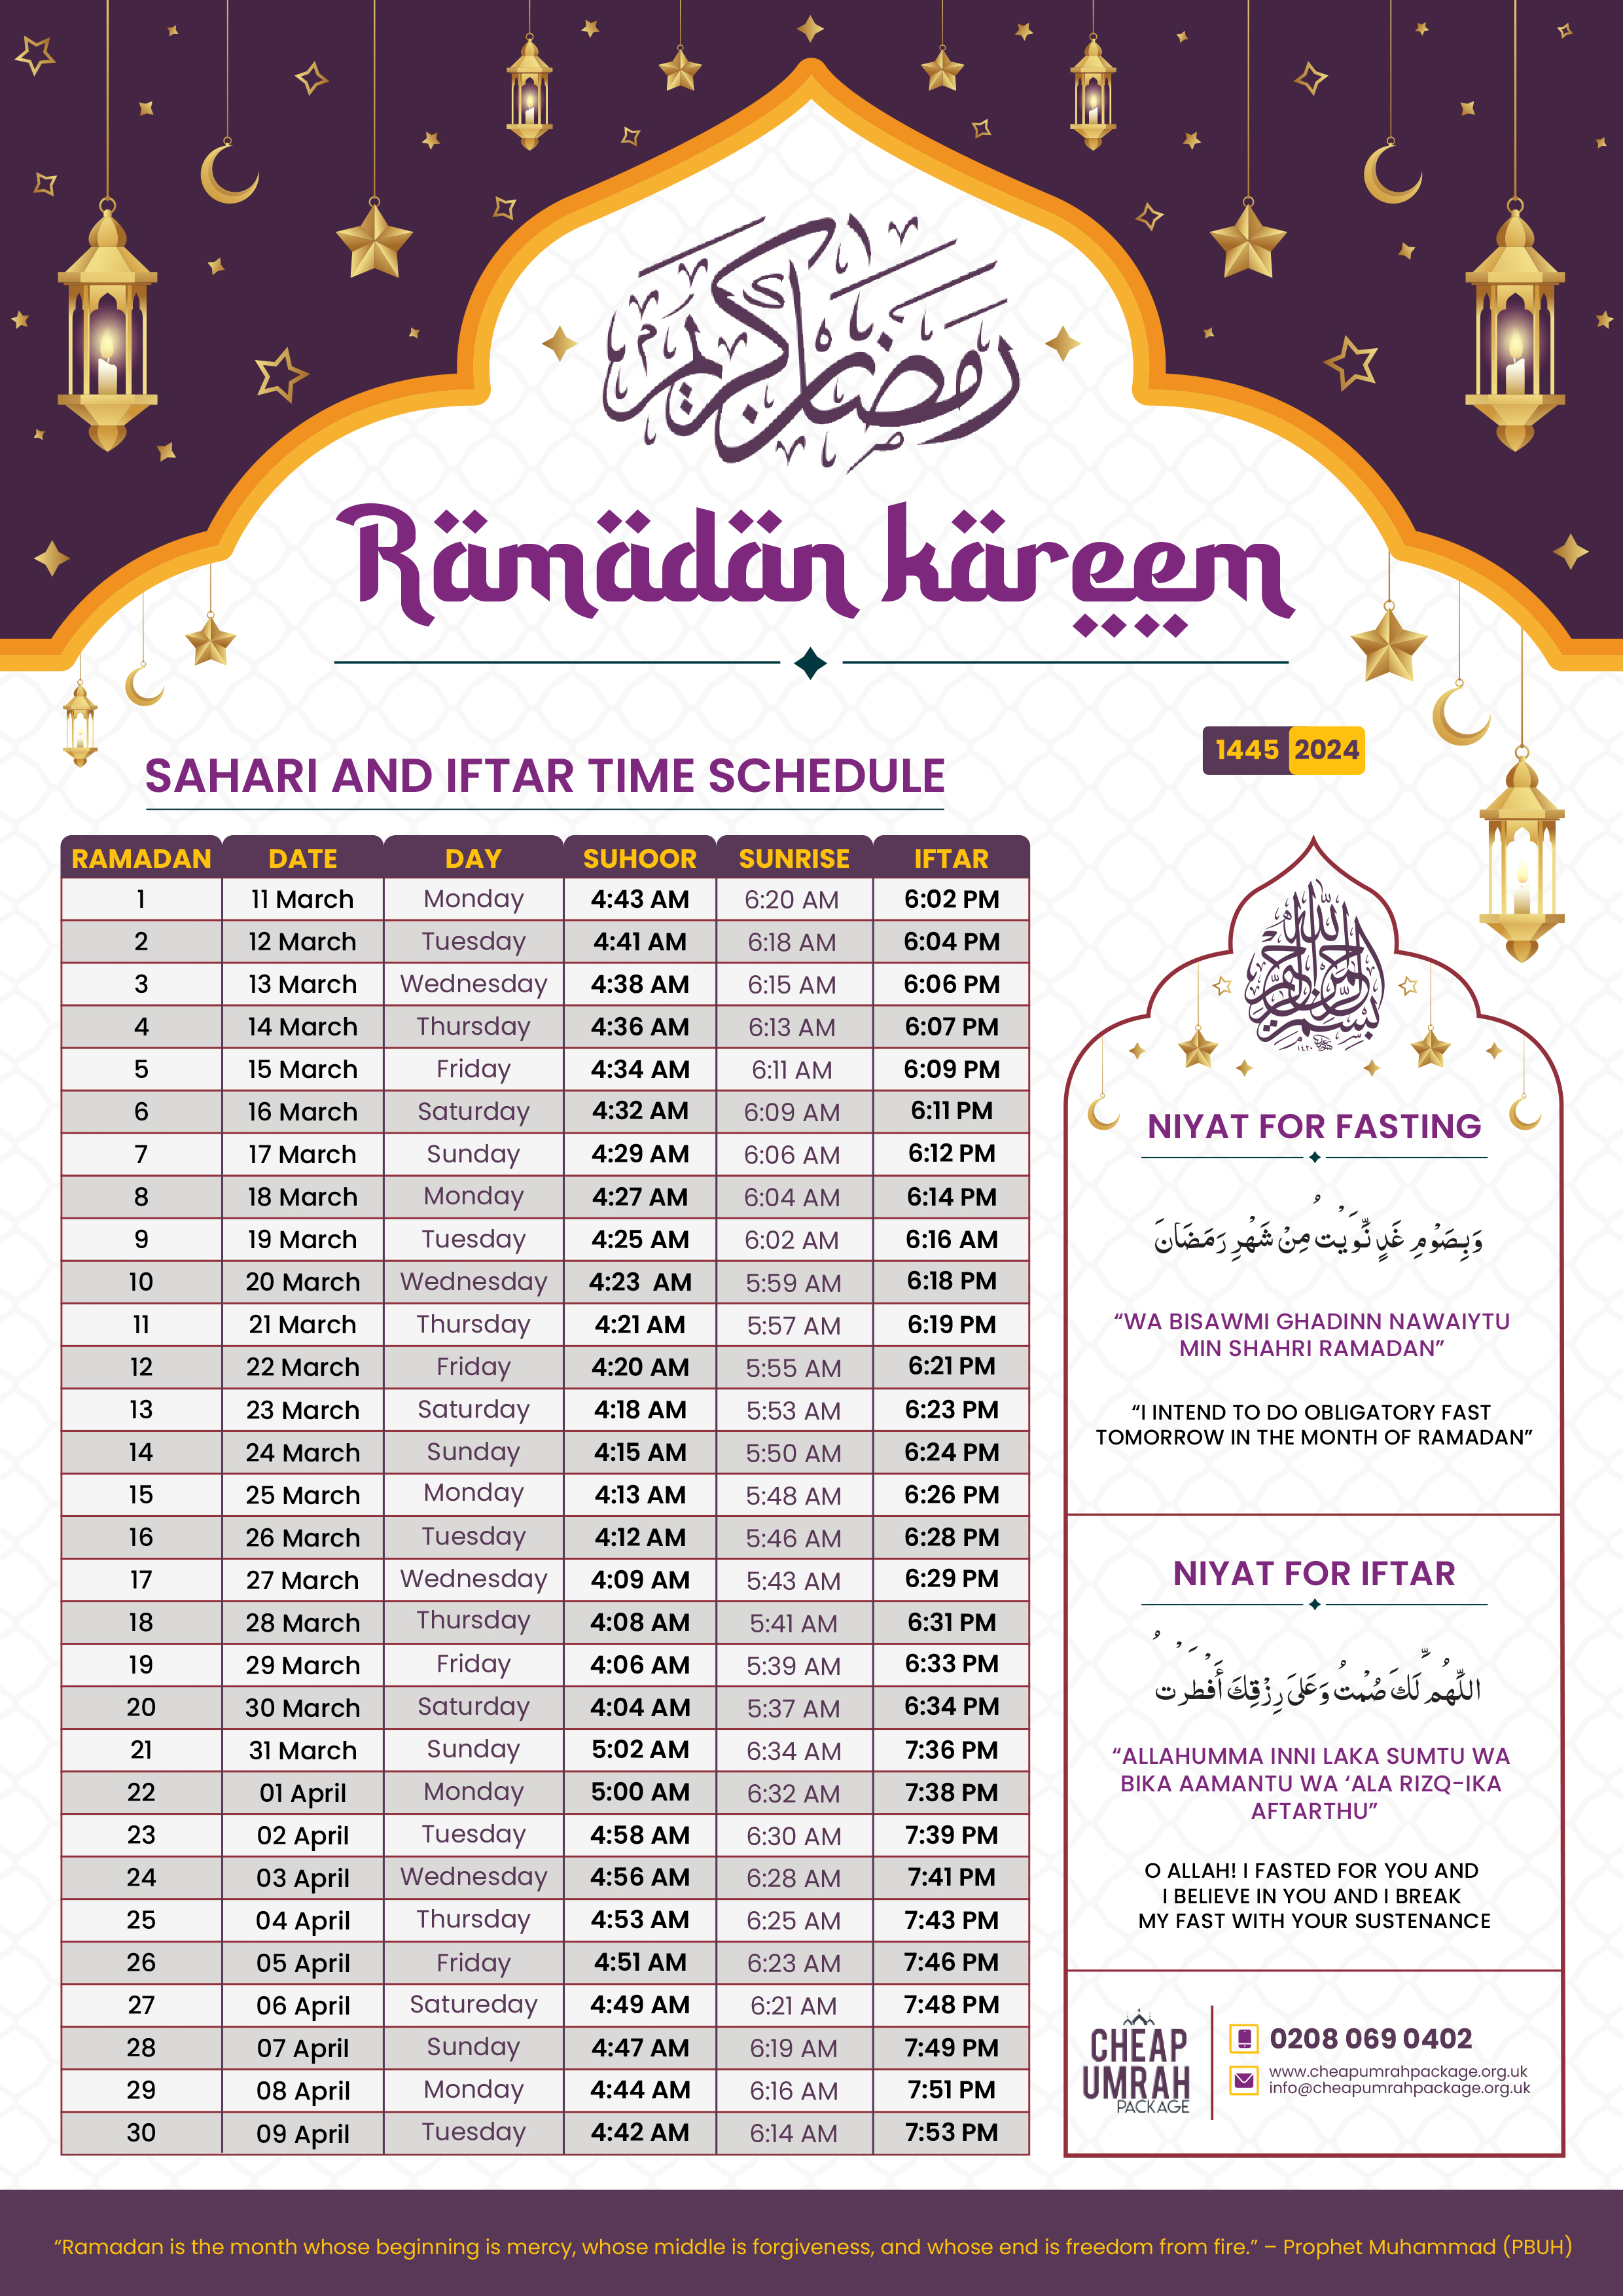 Ramadan timetable for London